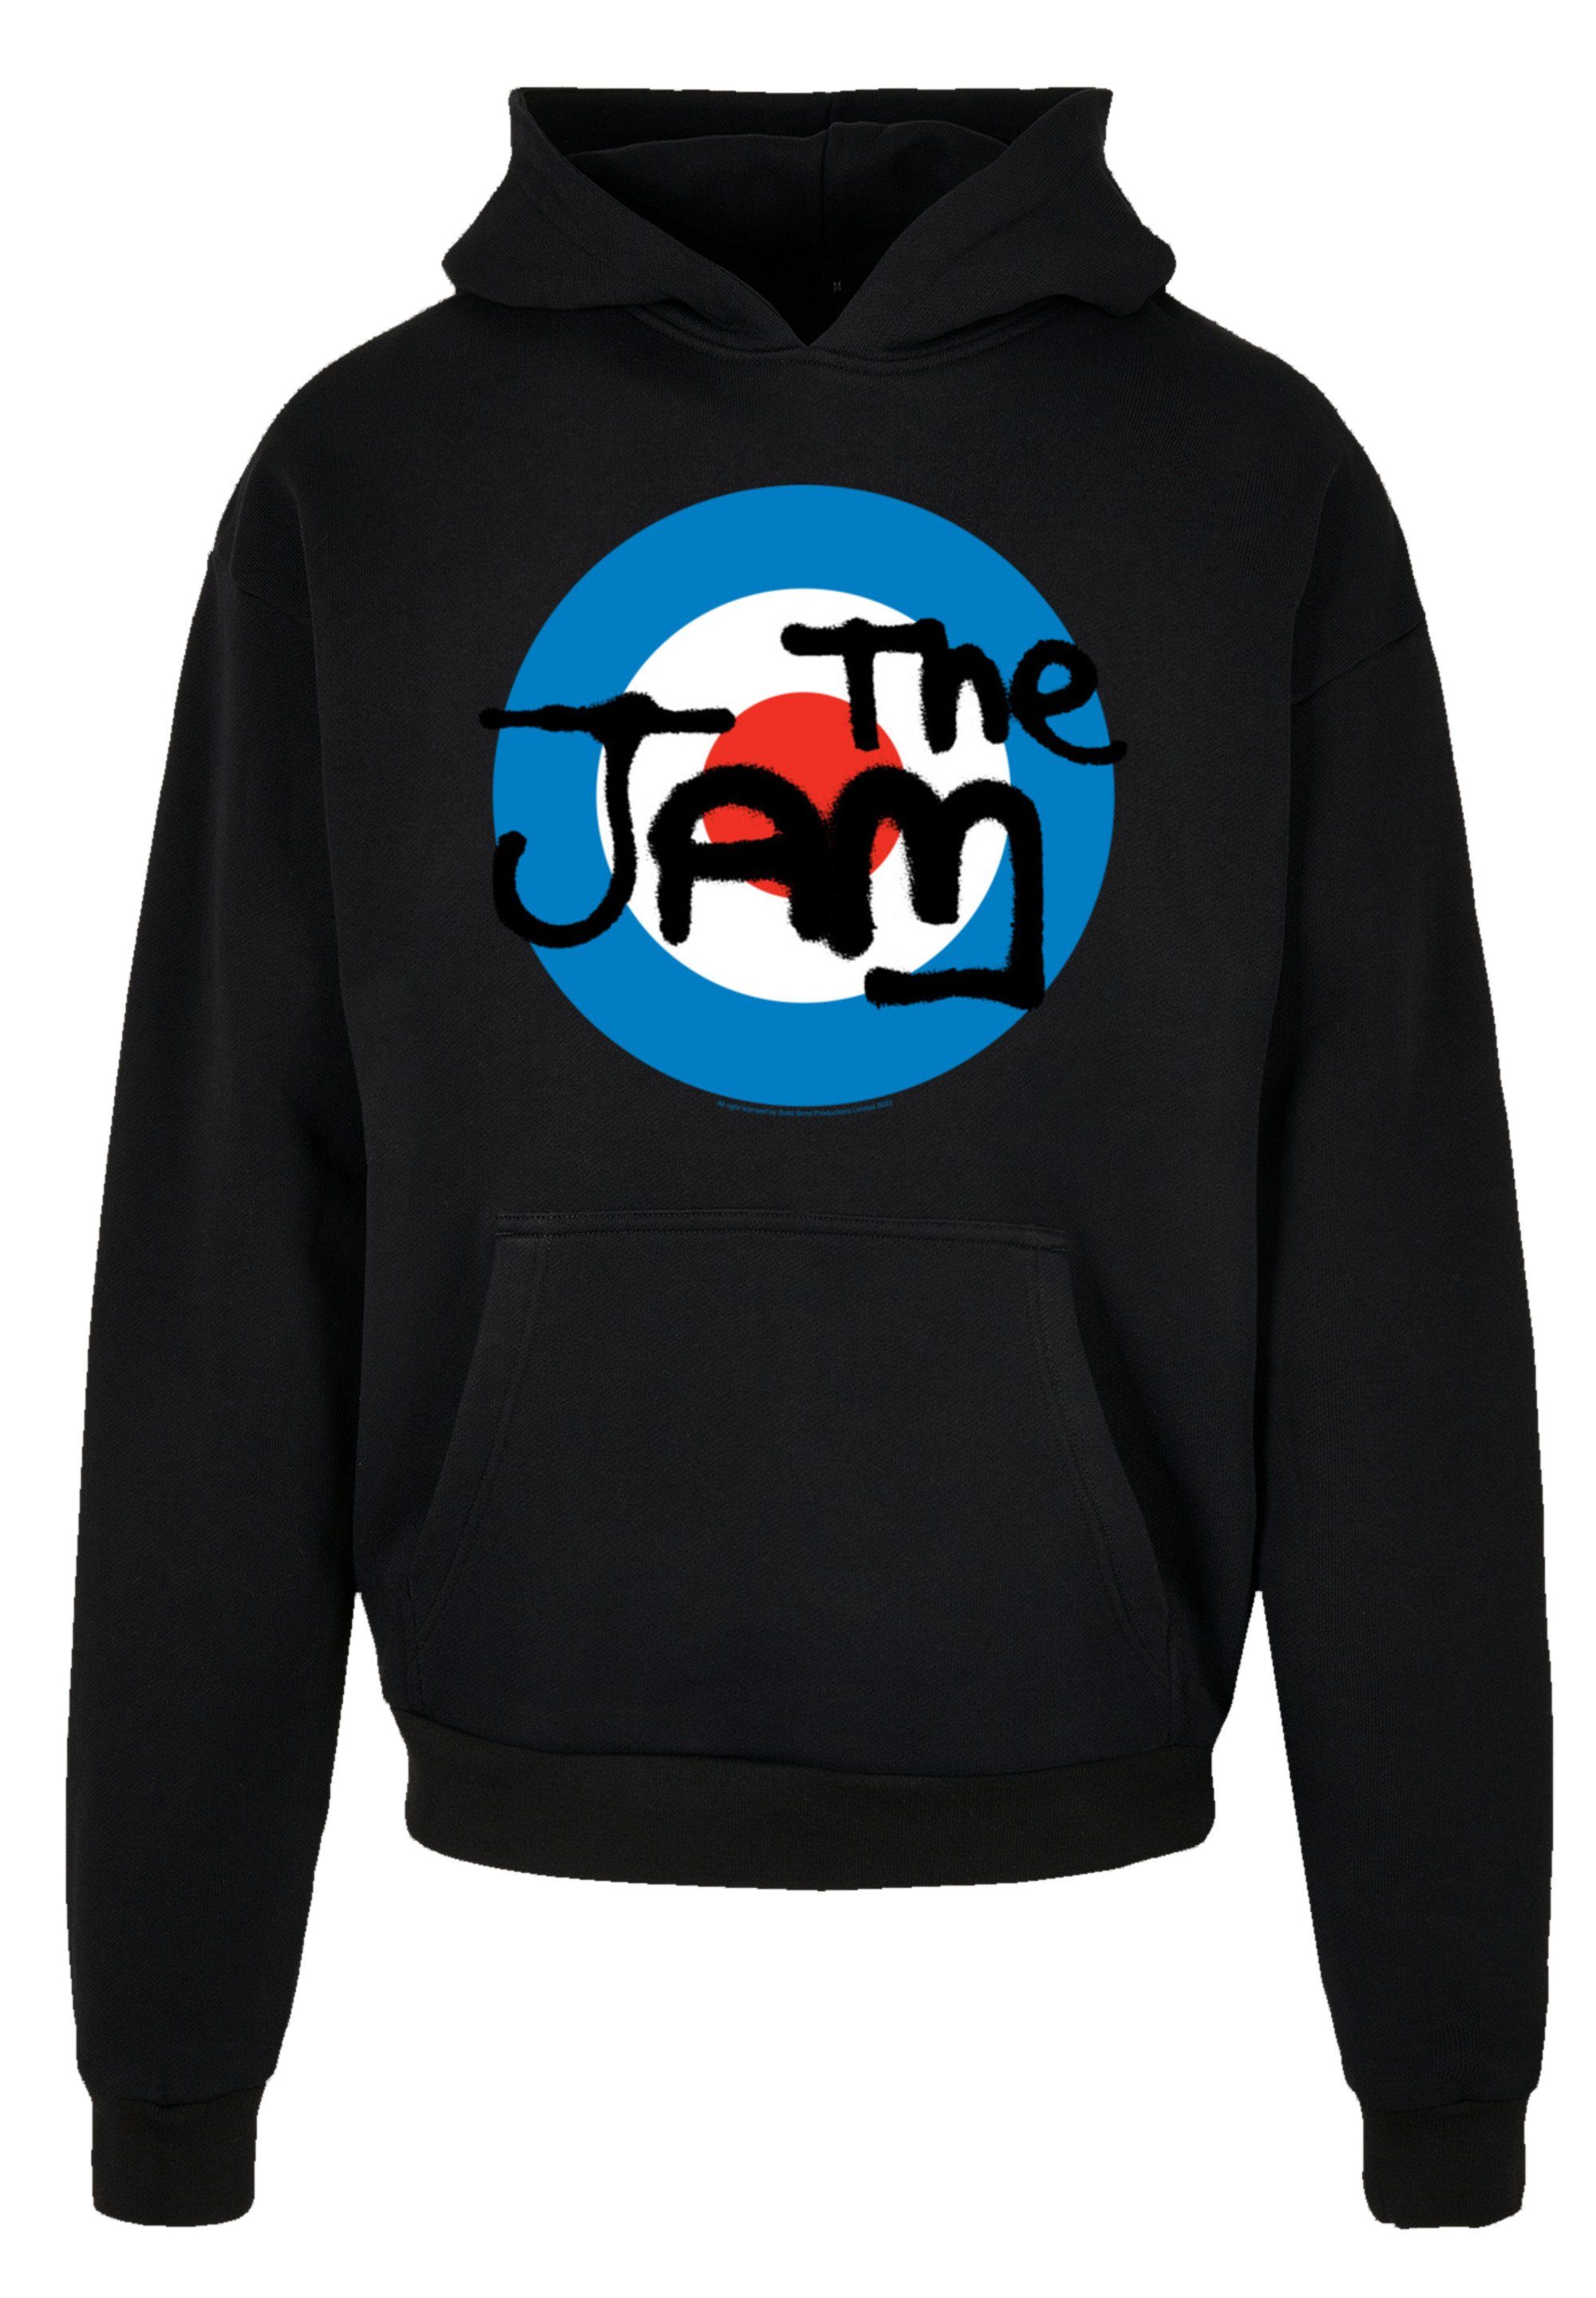 Premium Qualität, Band lizenzierter The Who Jam Hoodie F4NT4STIC Kapuzenpullover Logo Offiziell The Classic